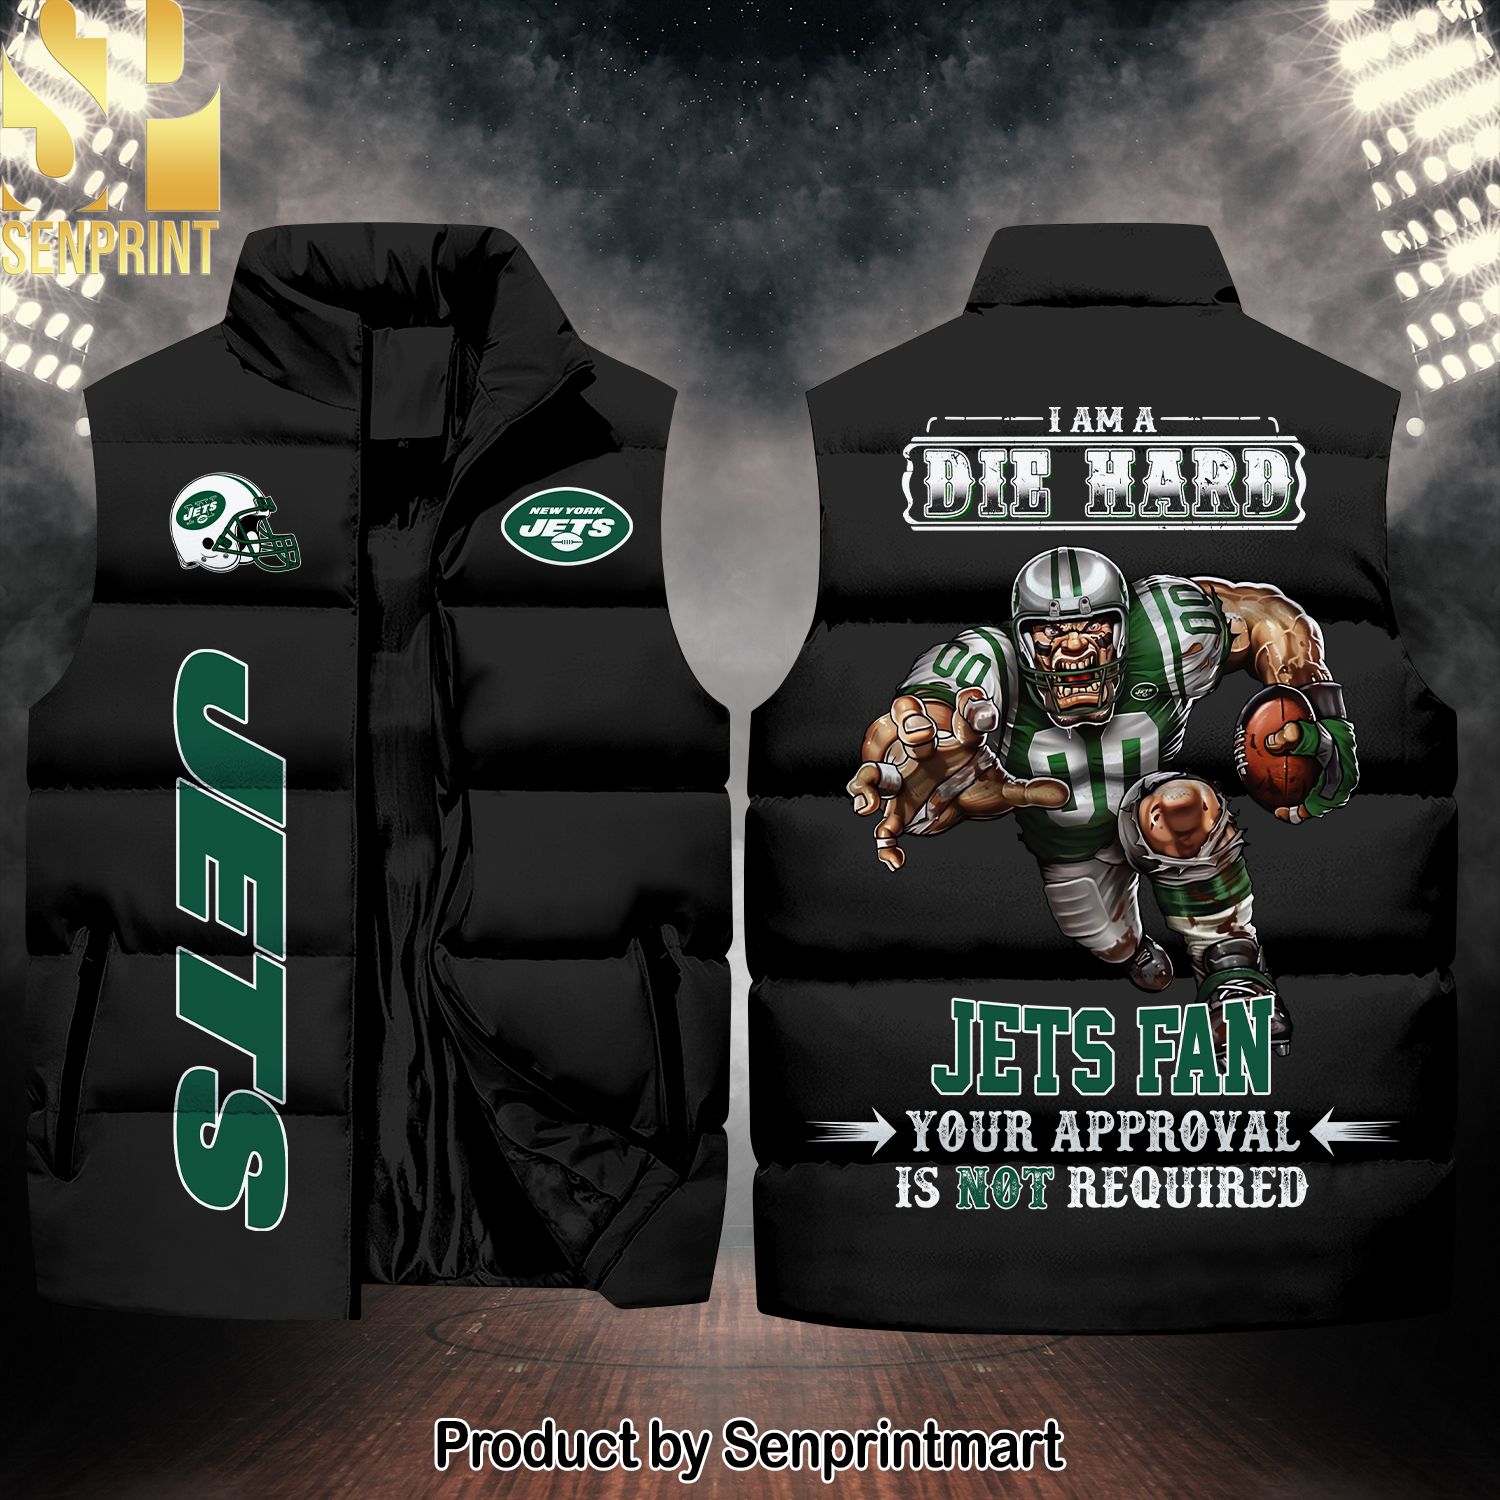 National Football League New York Jets Die Hard Fan Best Outfit Sleeveless Jacket